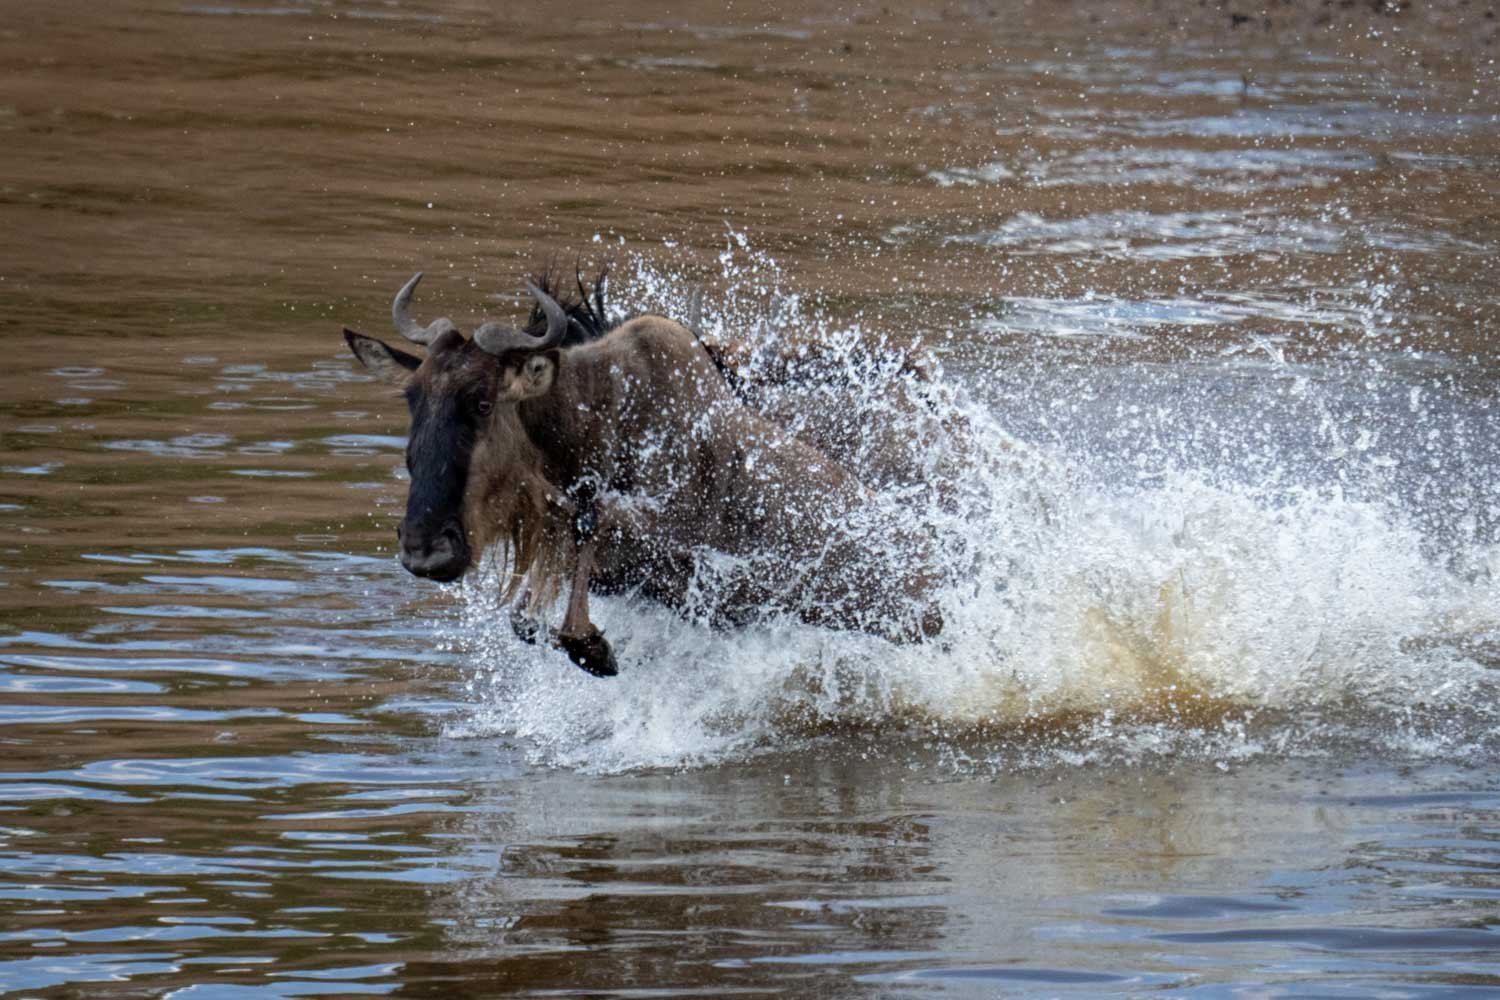 Blue wildebeest gallops across river in spray